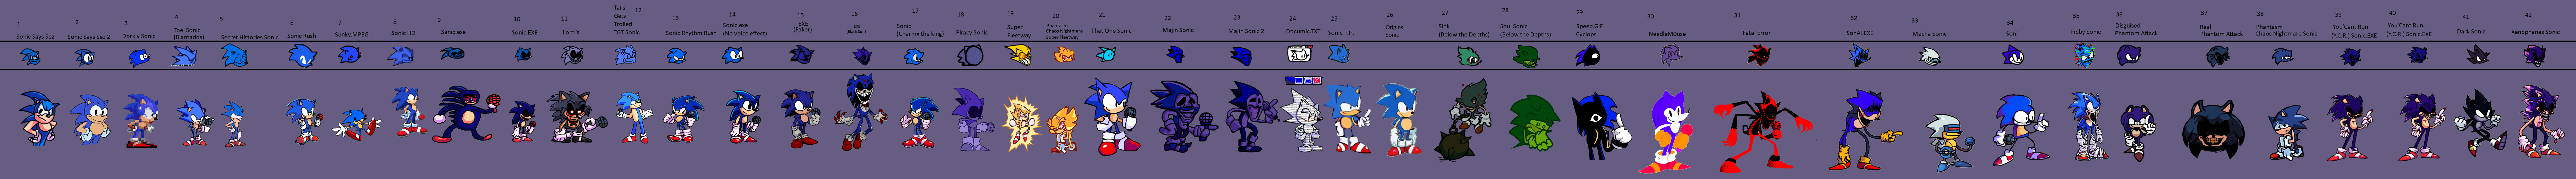 Sonic VS Fleetway Sonic Angle 2 by dEEEEEES -- Fur Affinity [dot] net